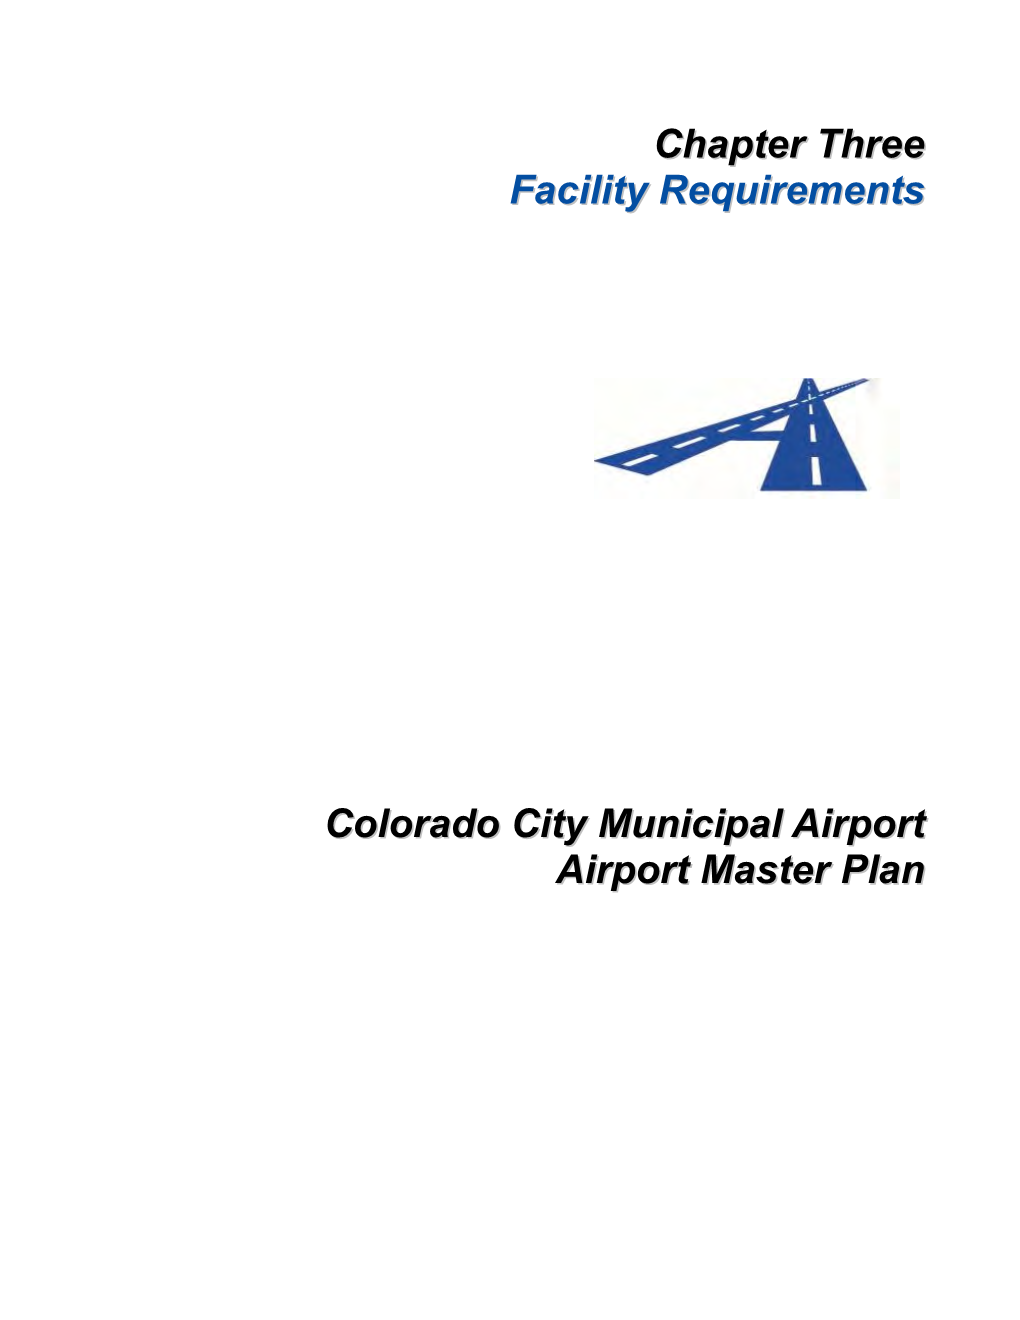 Chapter Three Facility Requirements Colorado City Municipal Airport